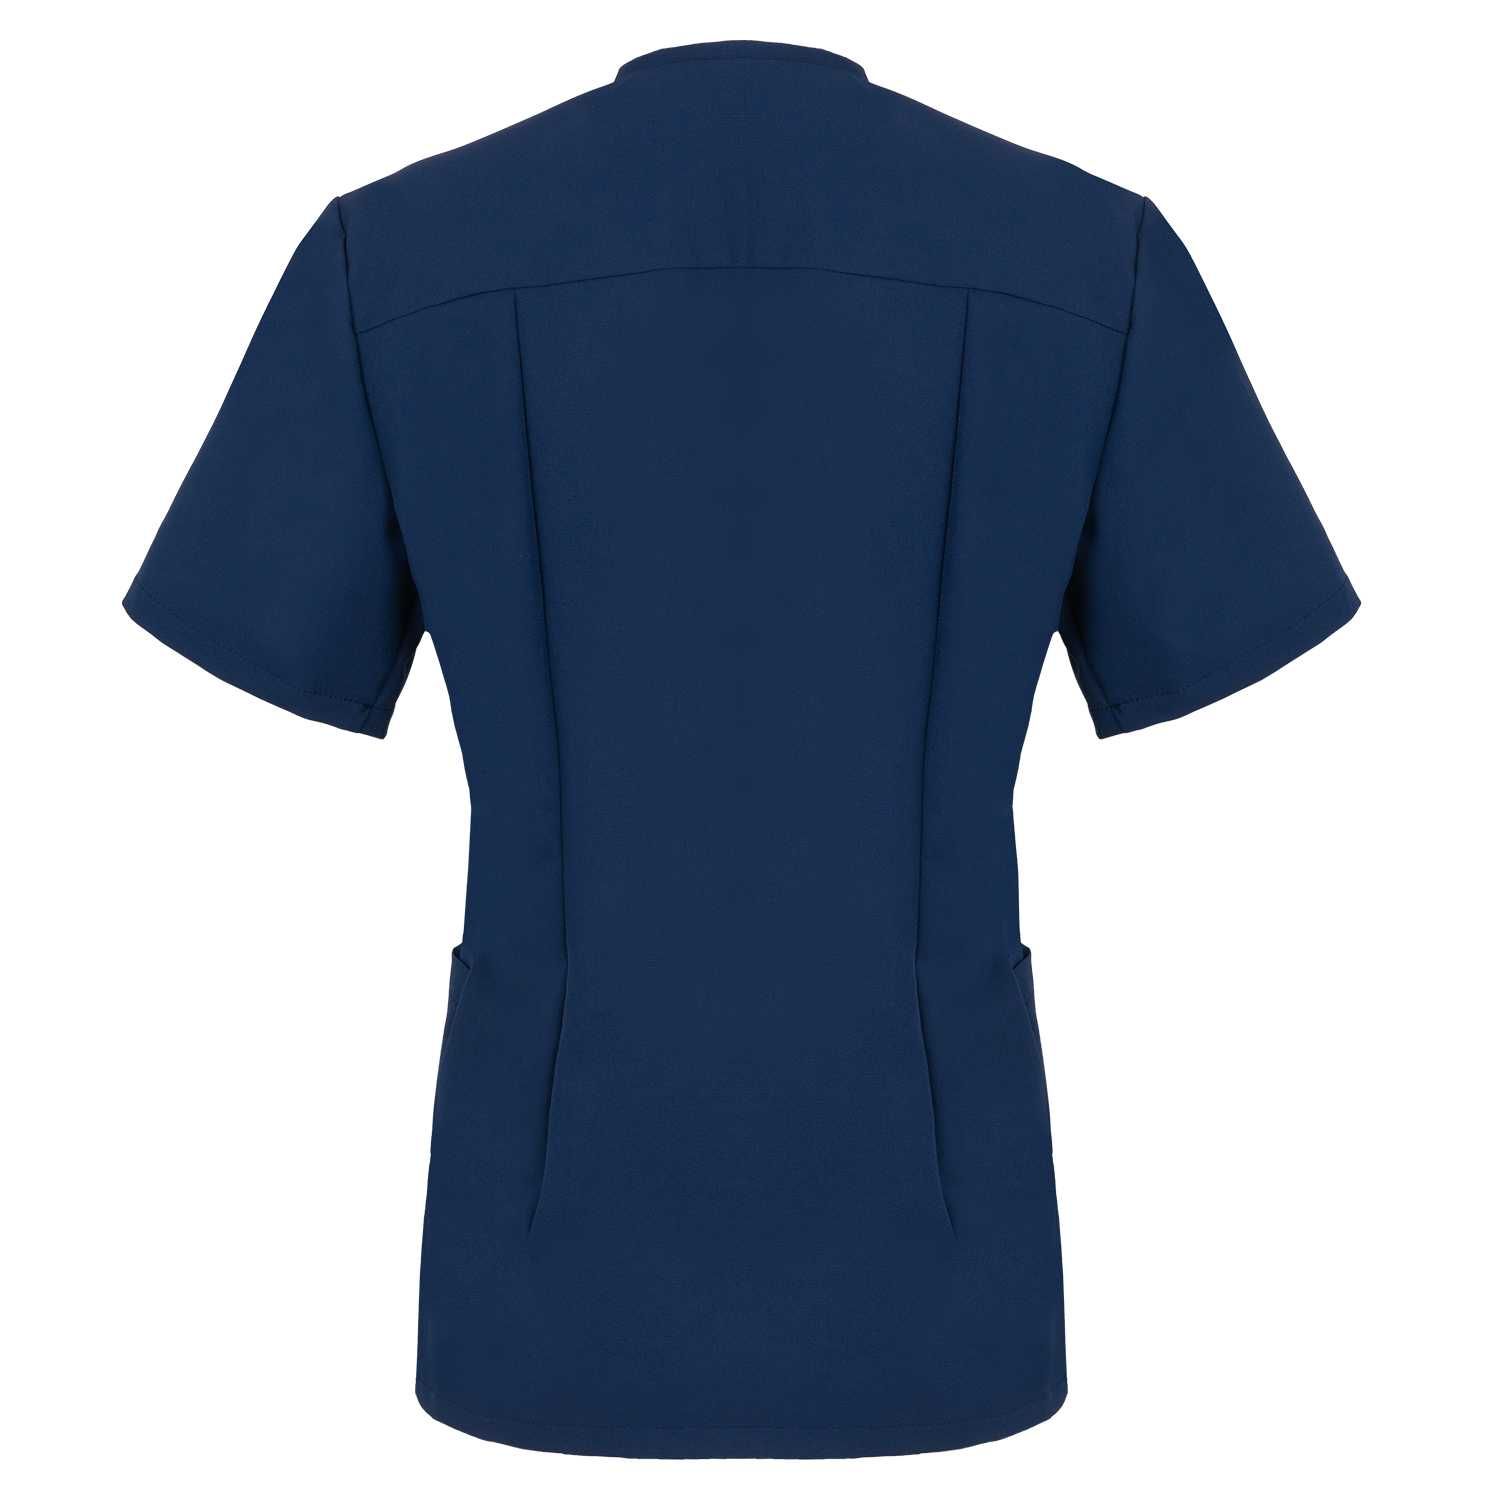 Bluza Medyczna Fresh Granatowa Sandra-Med Komplet medyczny Rozmiar M